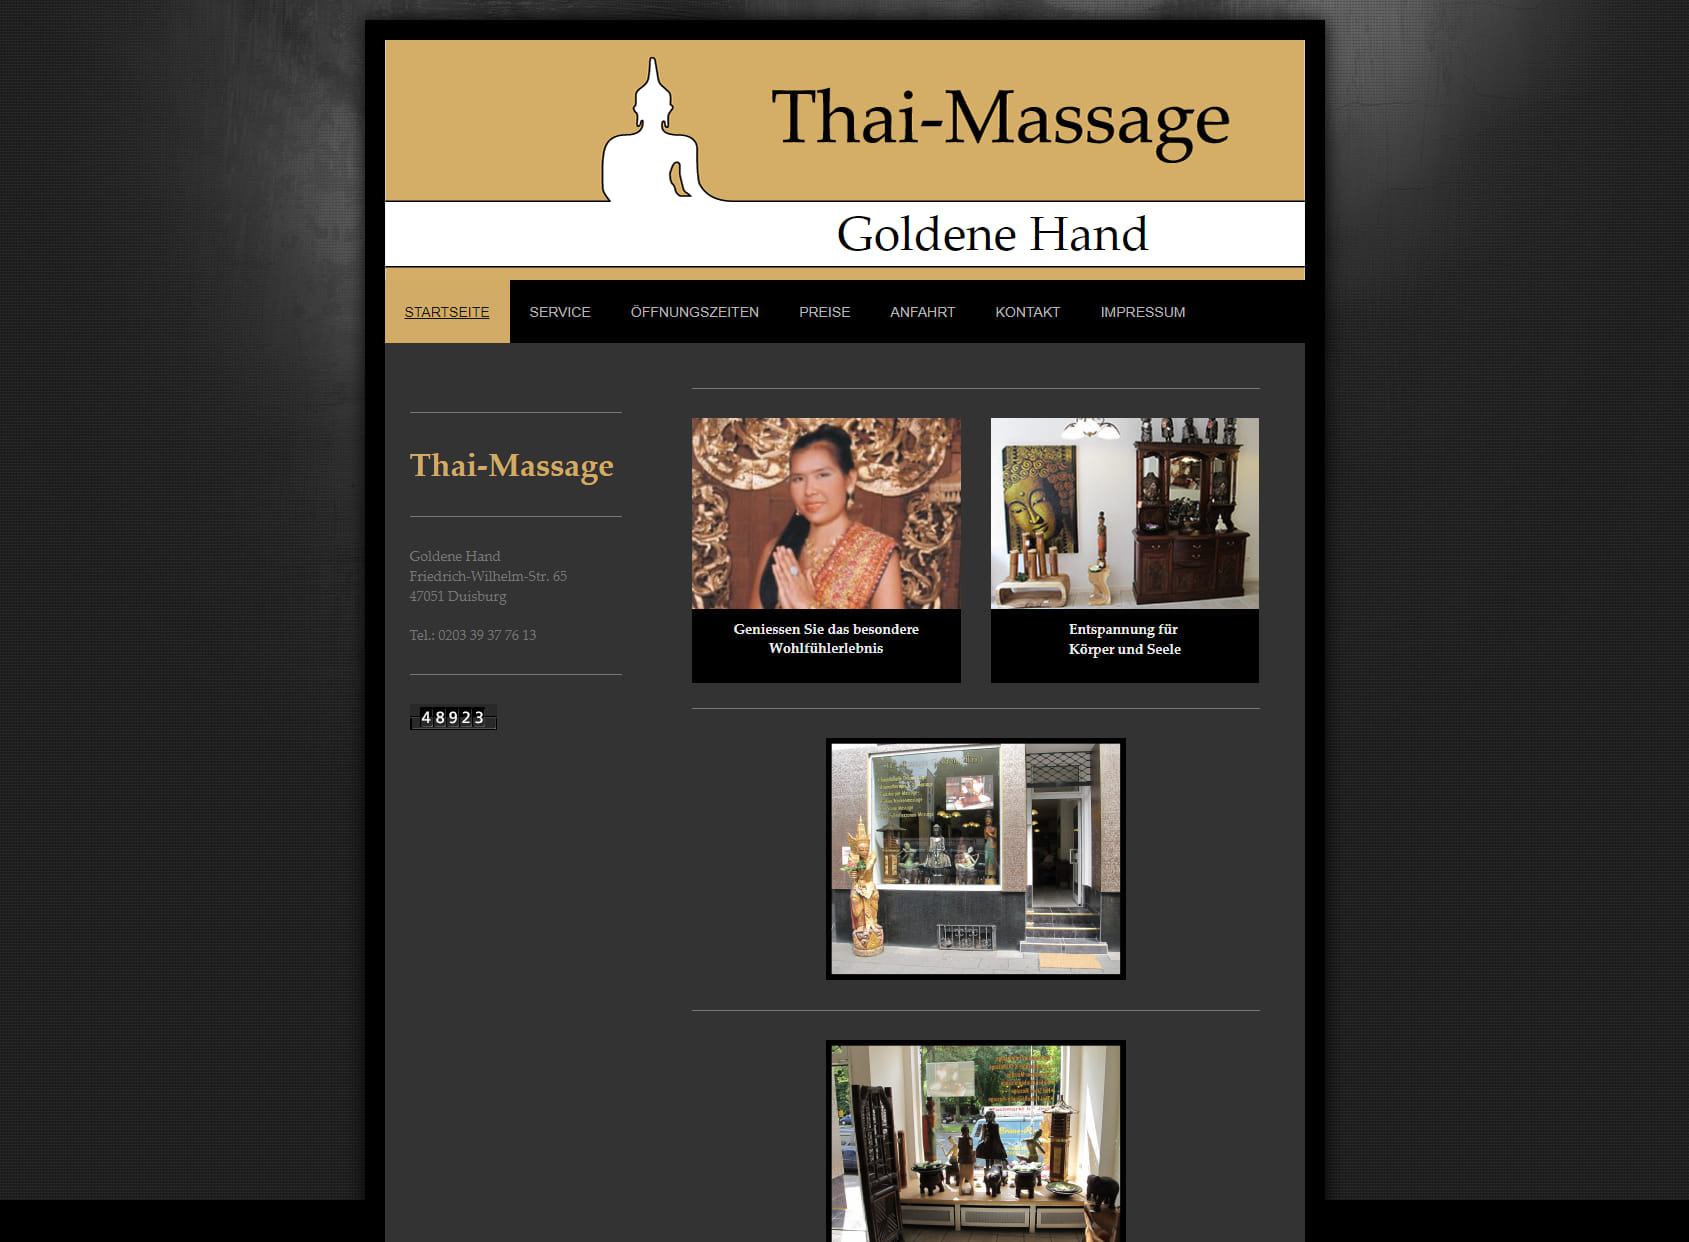 Goldene Hand Thai-massage